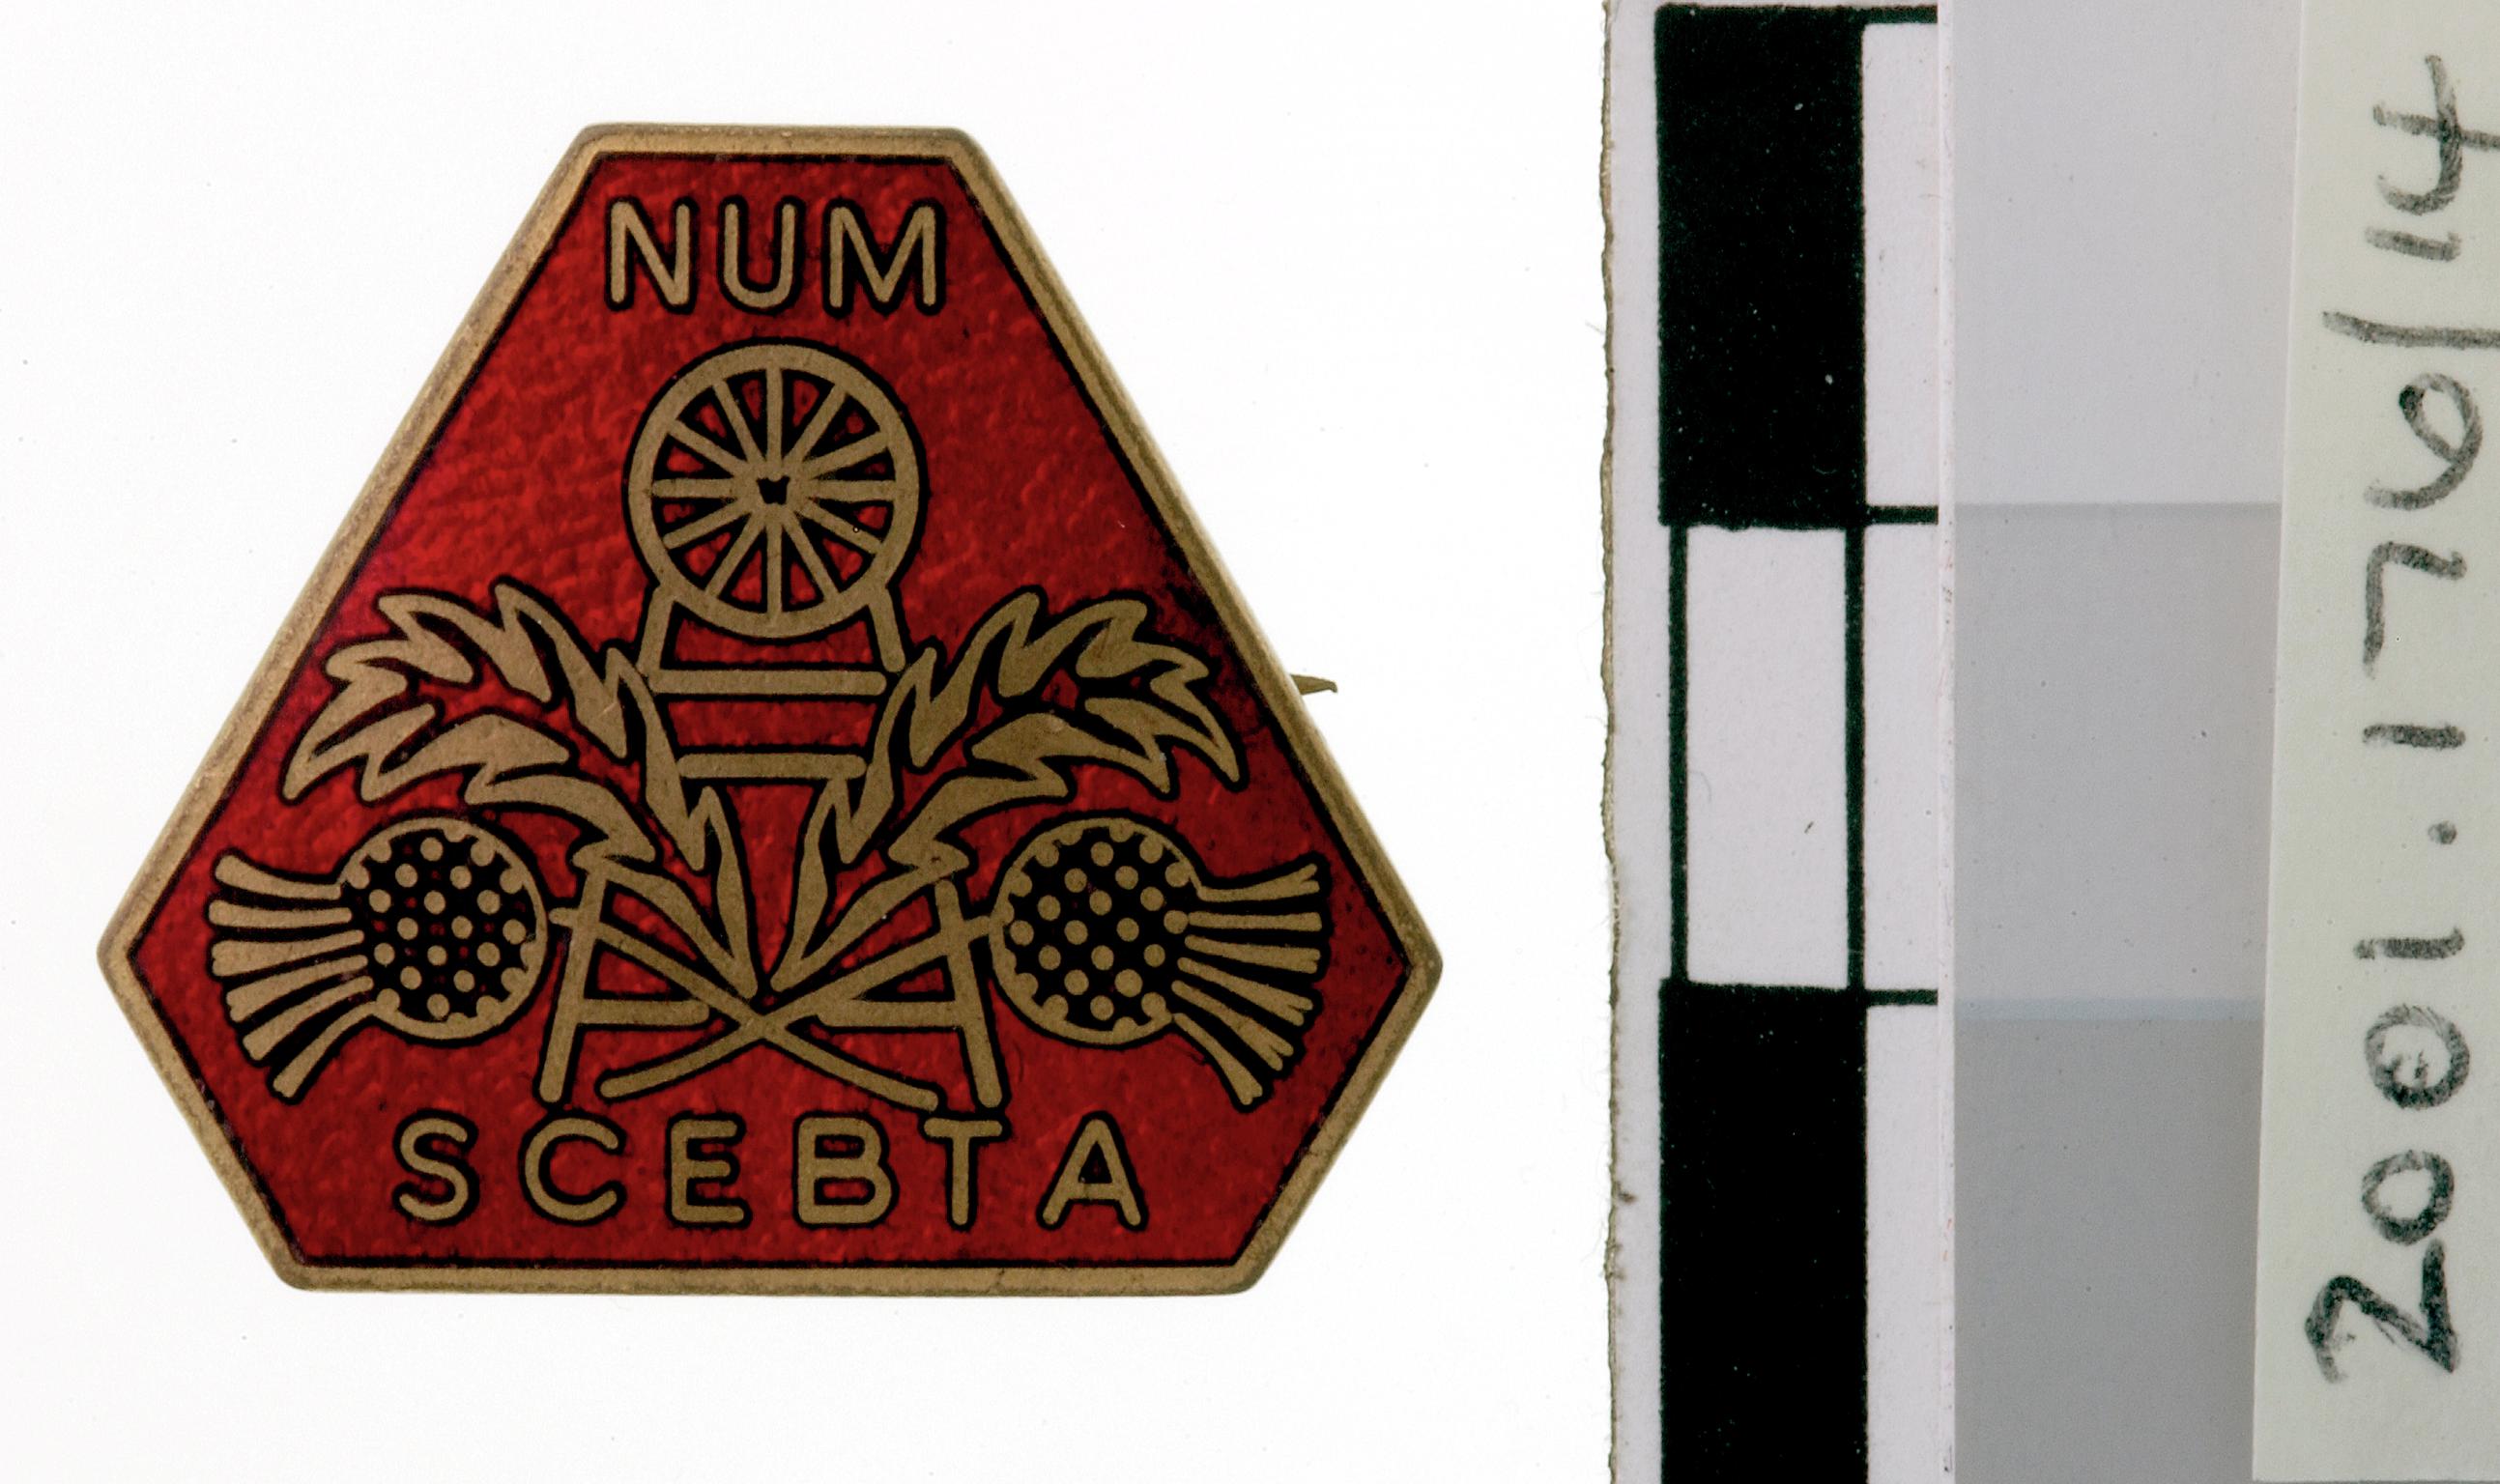 N.U.M. S.C.E.B.T.A., badge